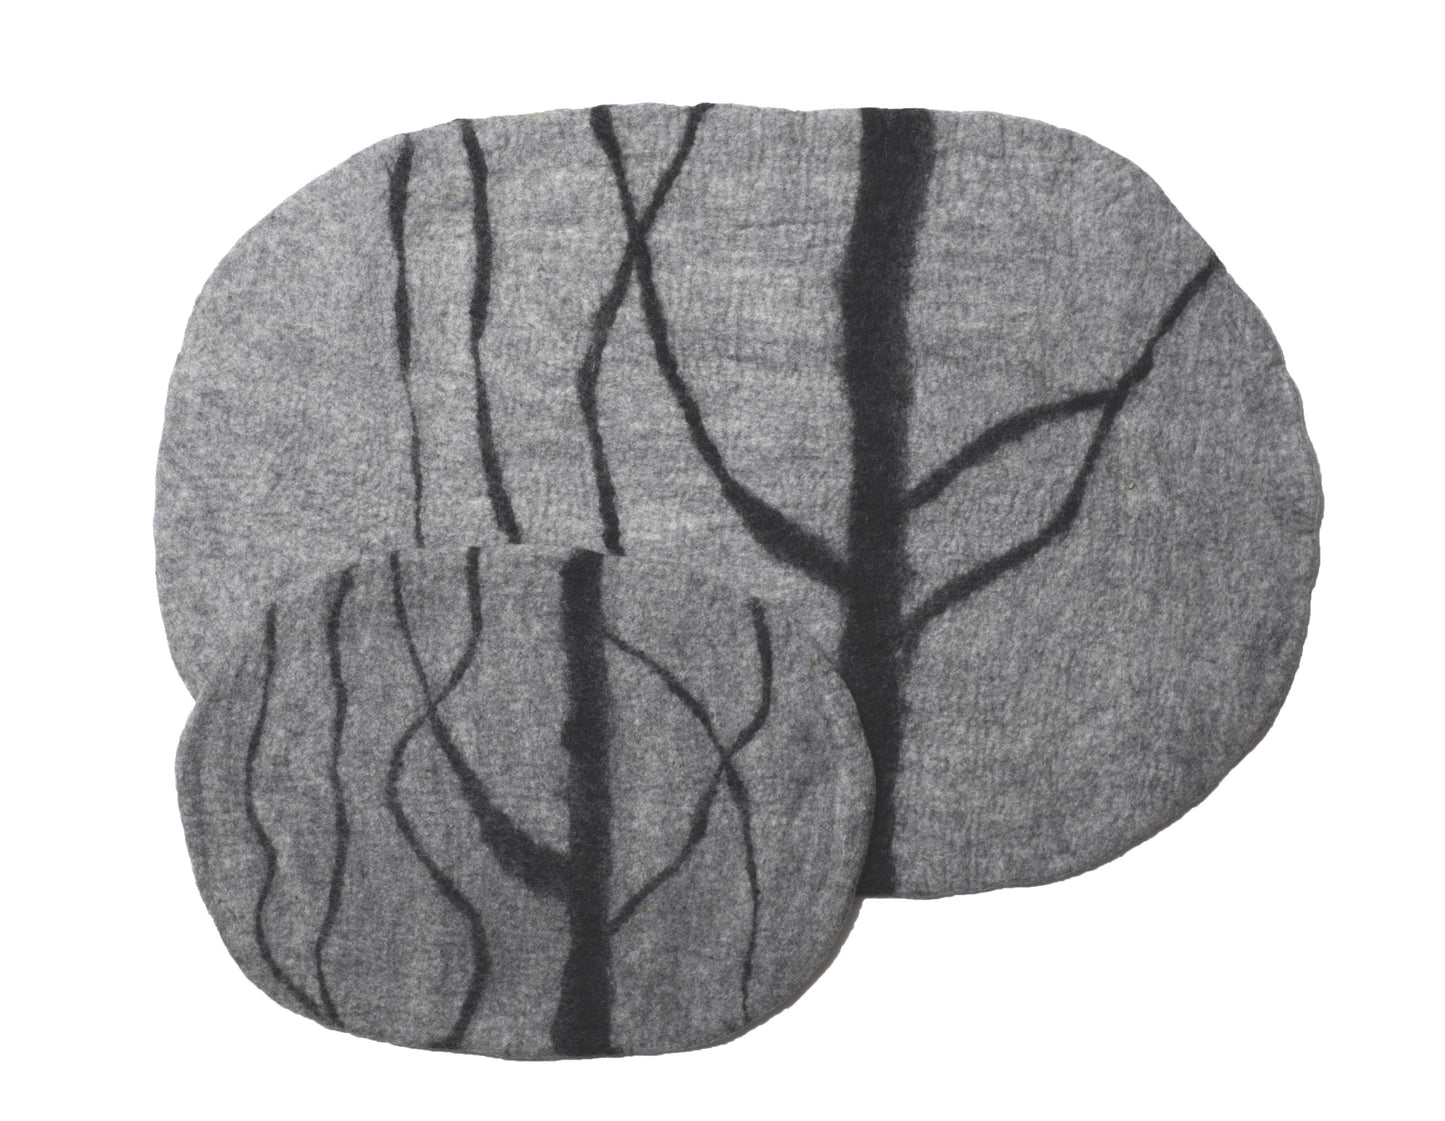 Wool Mat, River Stone, Light Grey